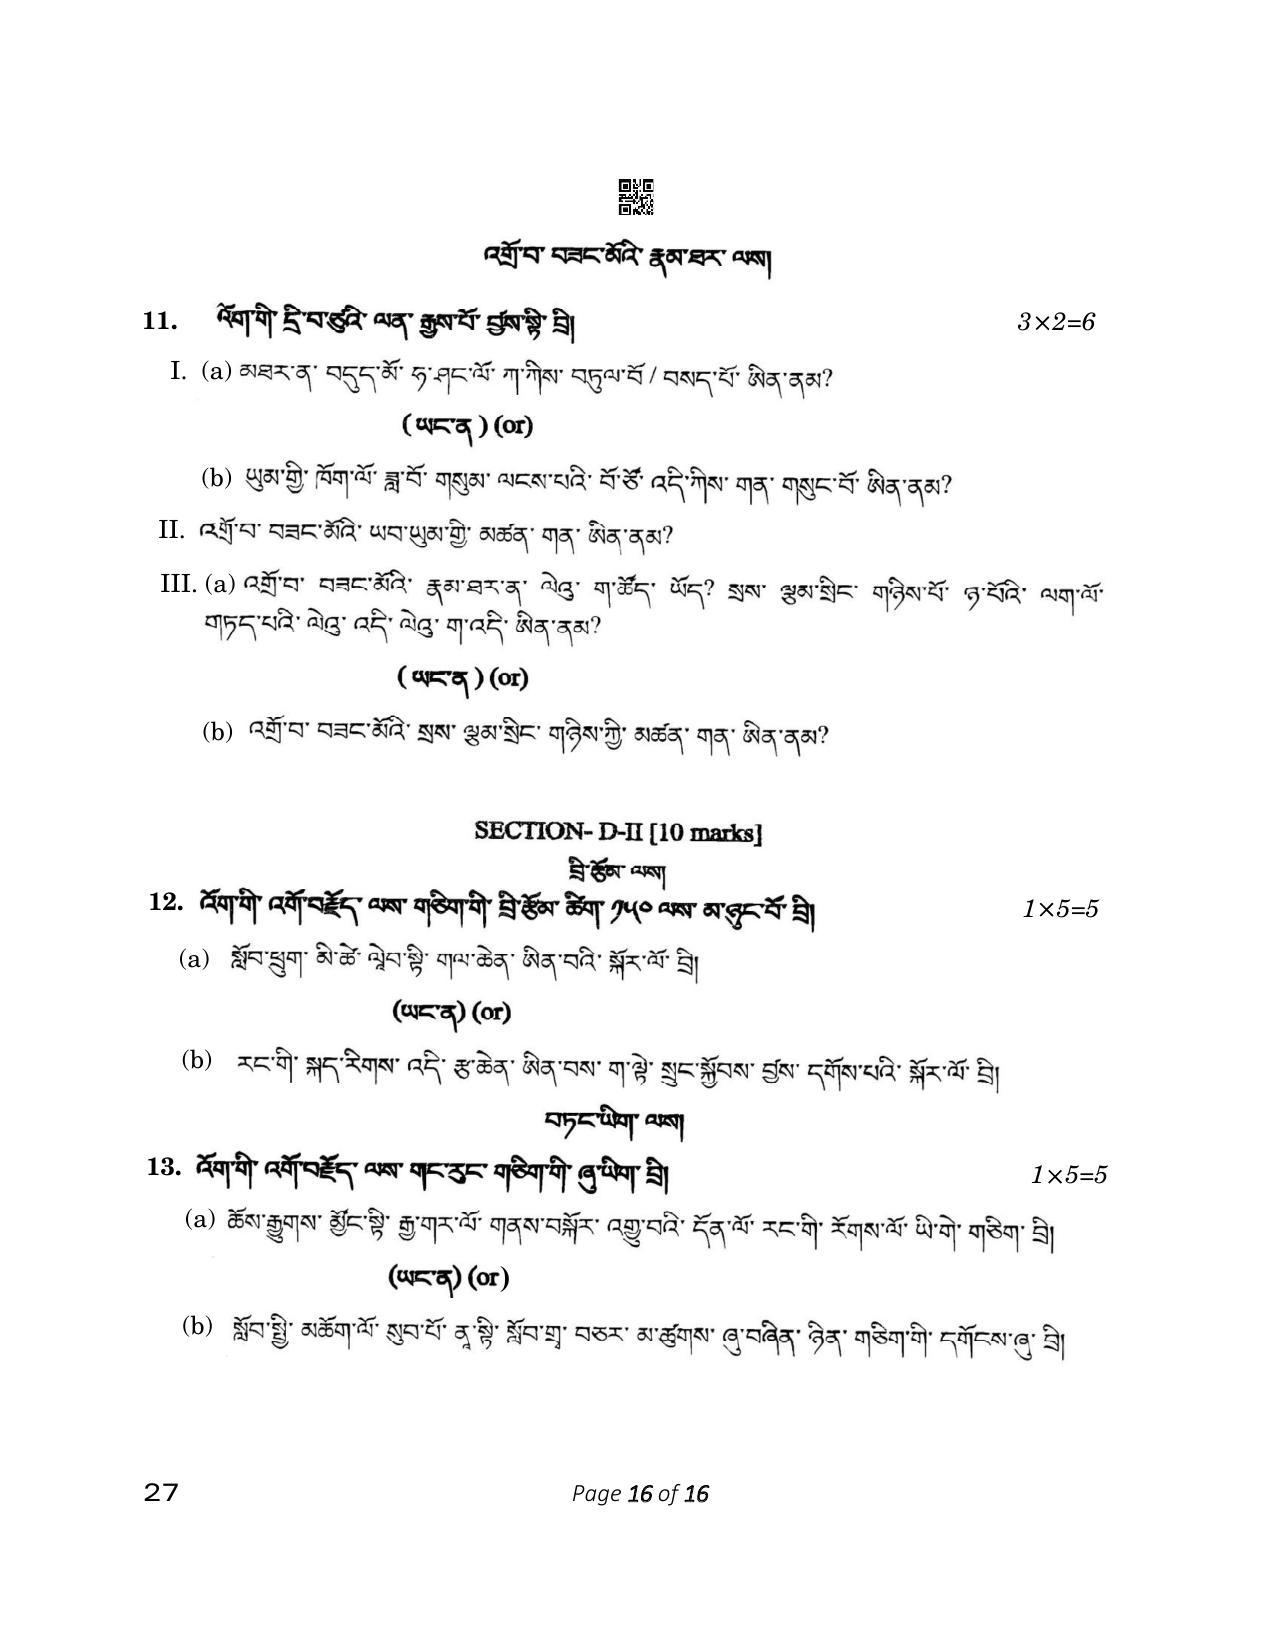 CBSE Class 12 27_Bhutia 2023 2023 Question Paper - Page 16